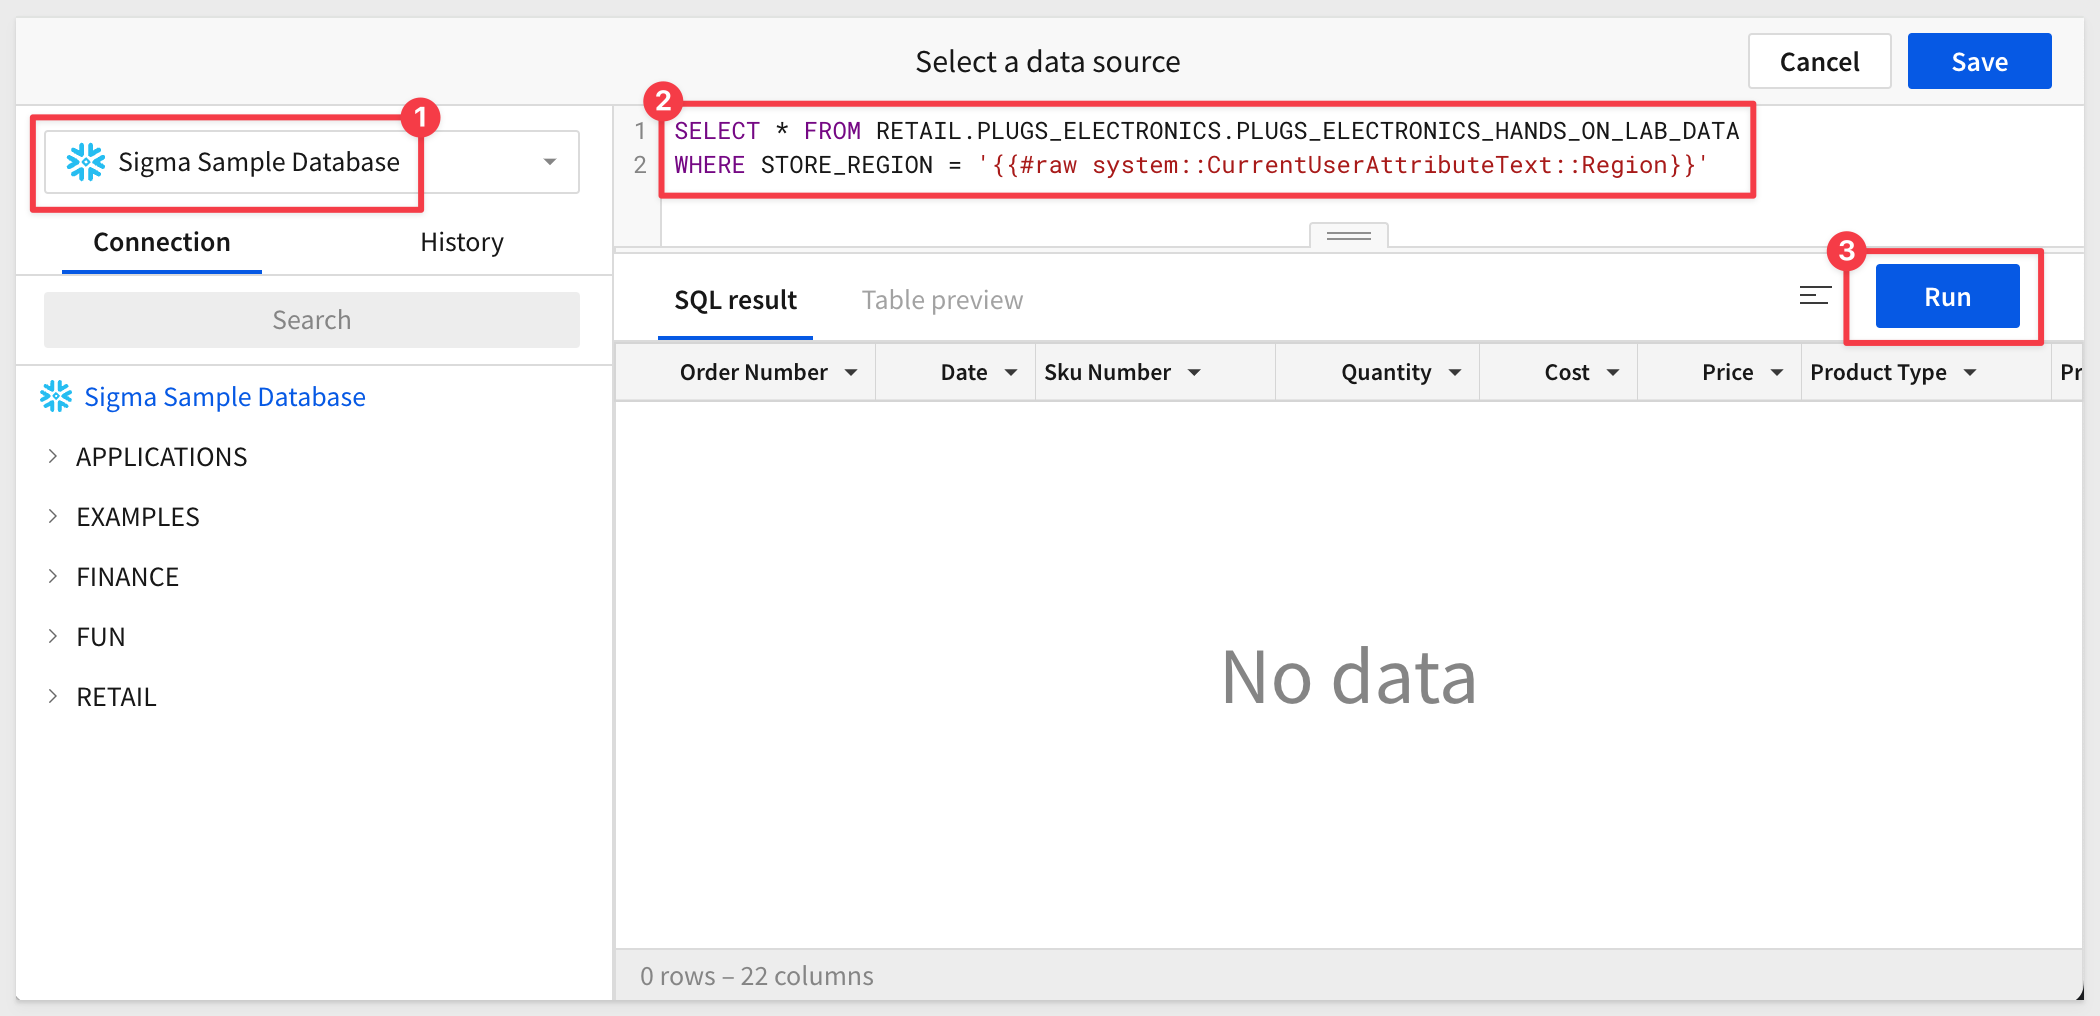 Custom SQL with User Attribute (having no default value set)